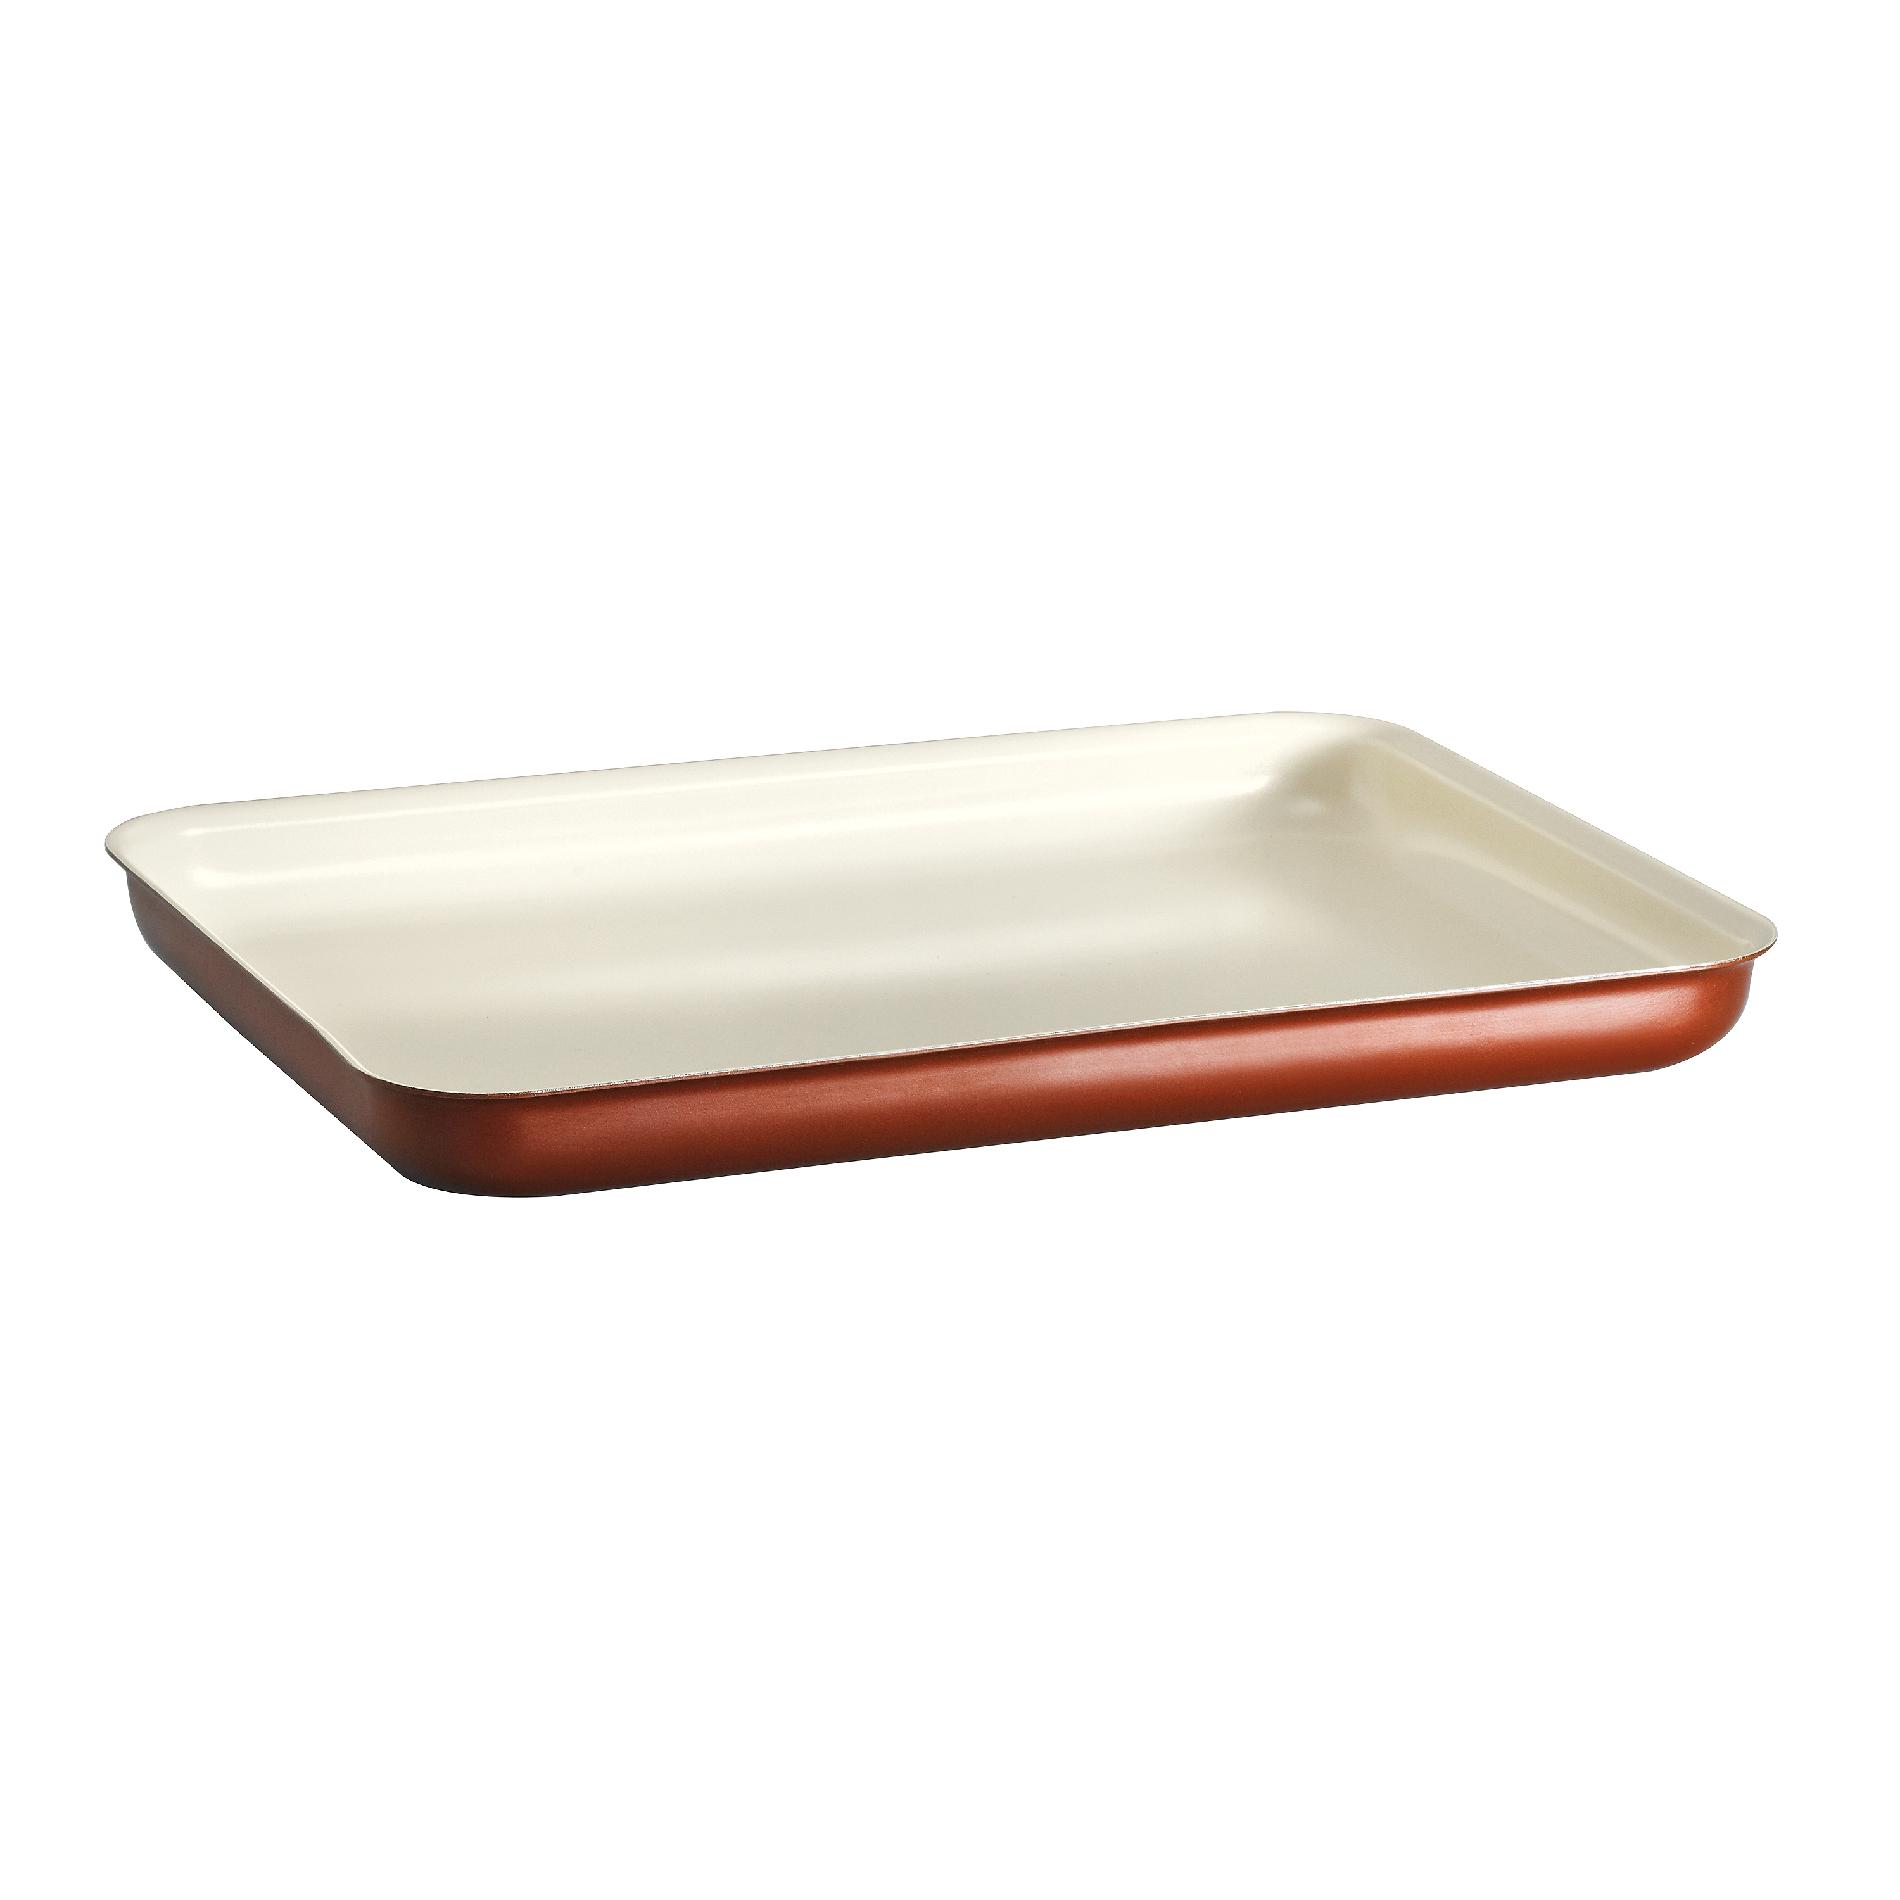 Style Ceramica_01 Metallic Copper 16 x 11 Baking Tray